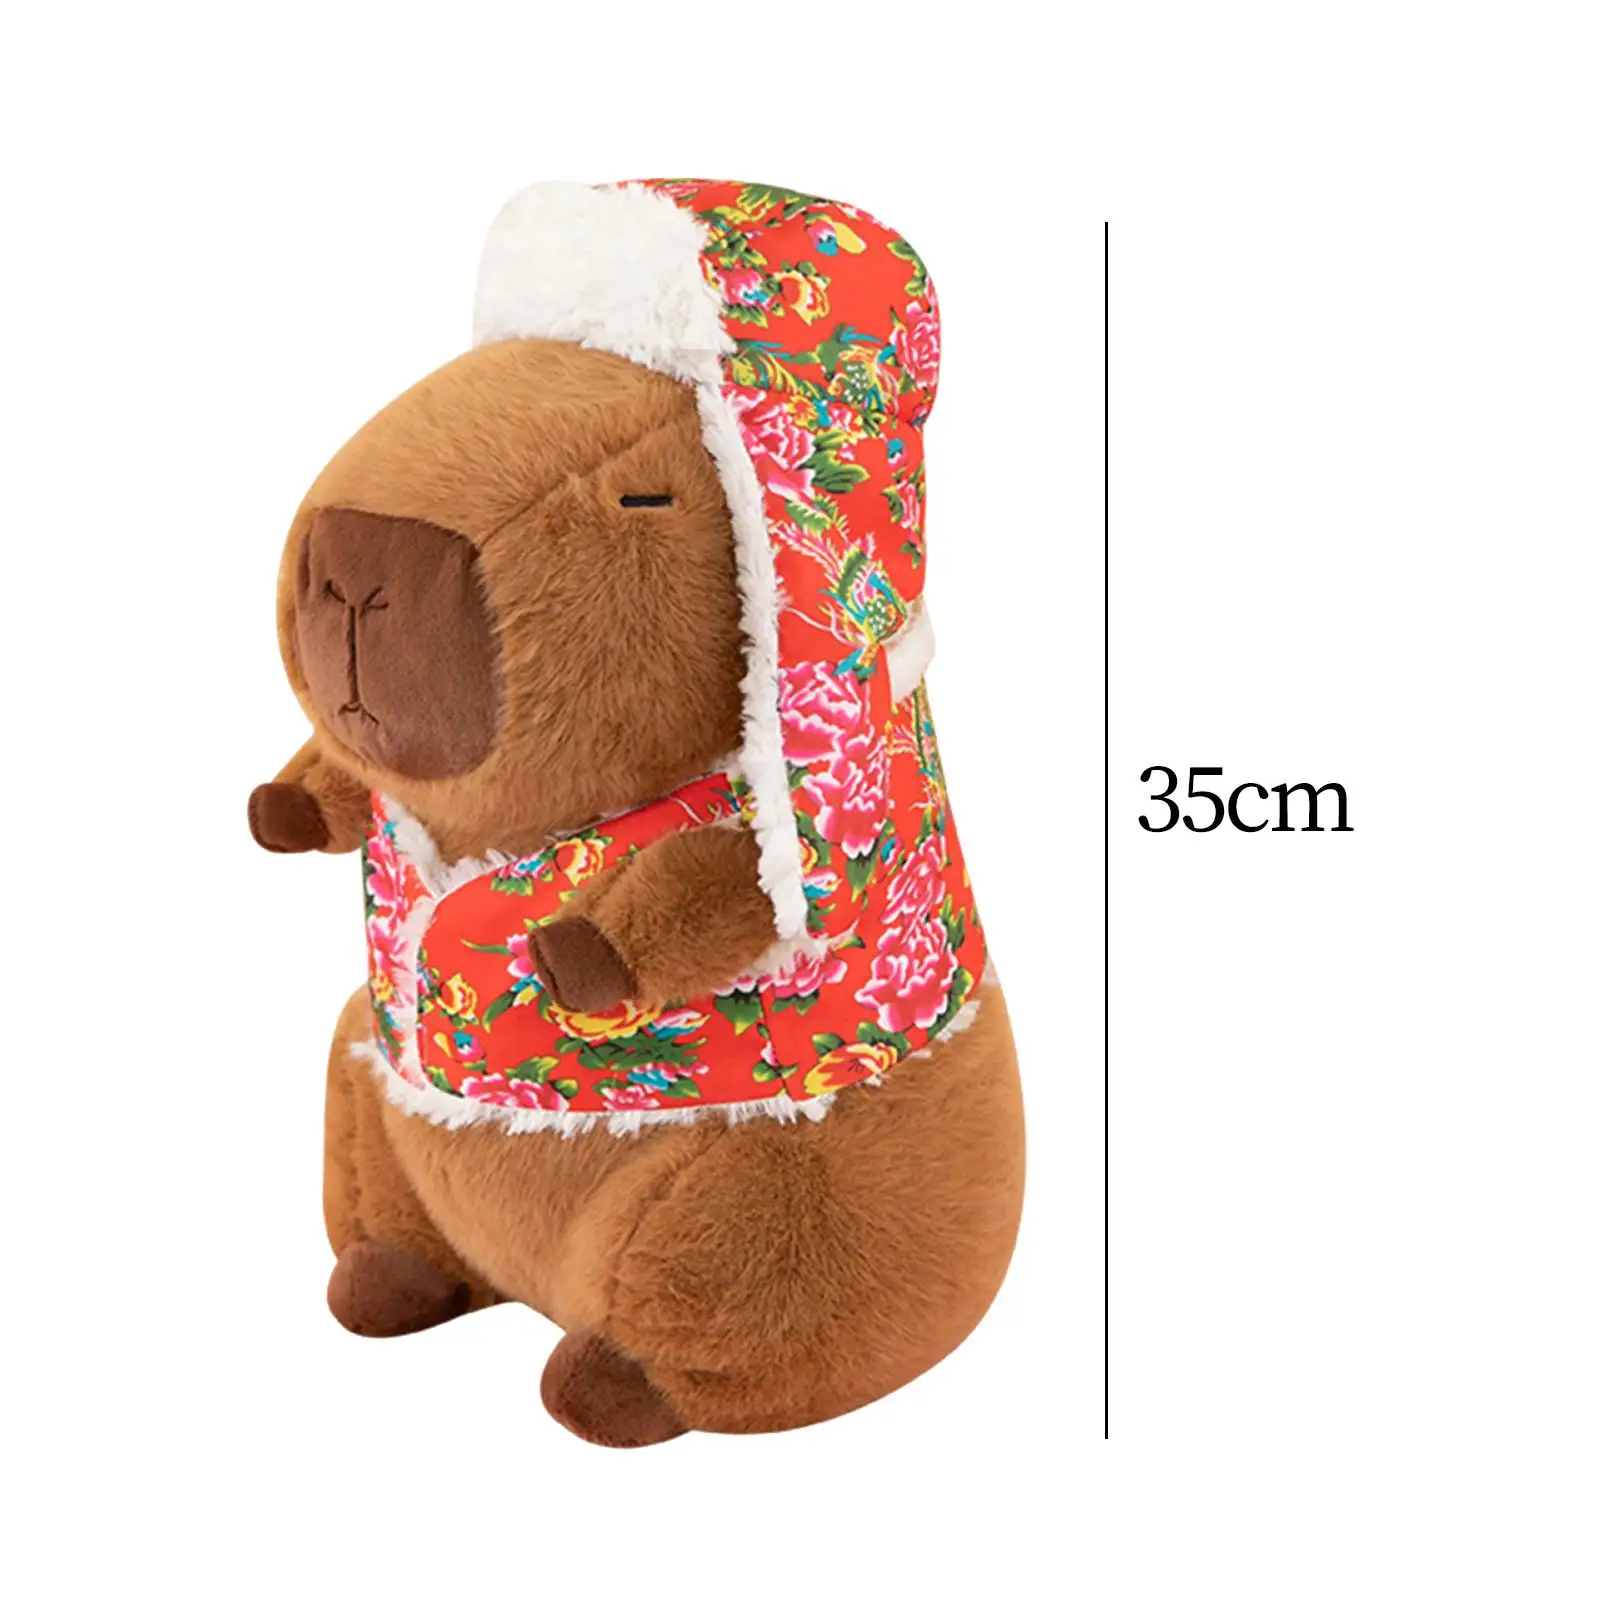 Cute Stuffed Plush Capybara Car Decorative Accompany Sleep Toy Soft Toy for Teens Adults Boys Girls Children Creative Gifts